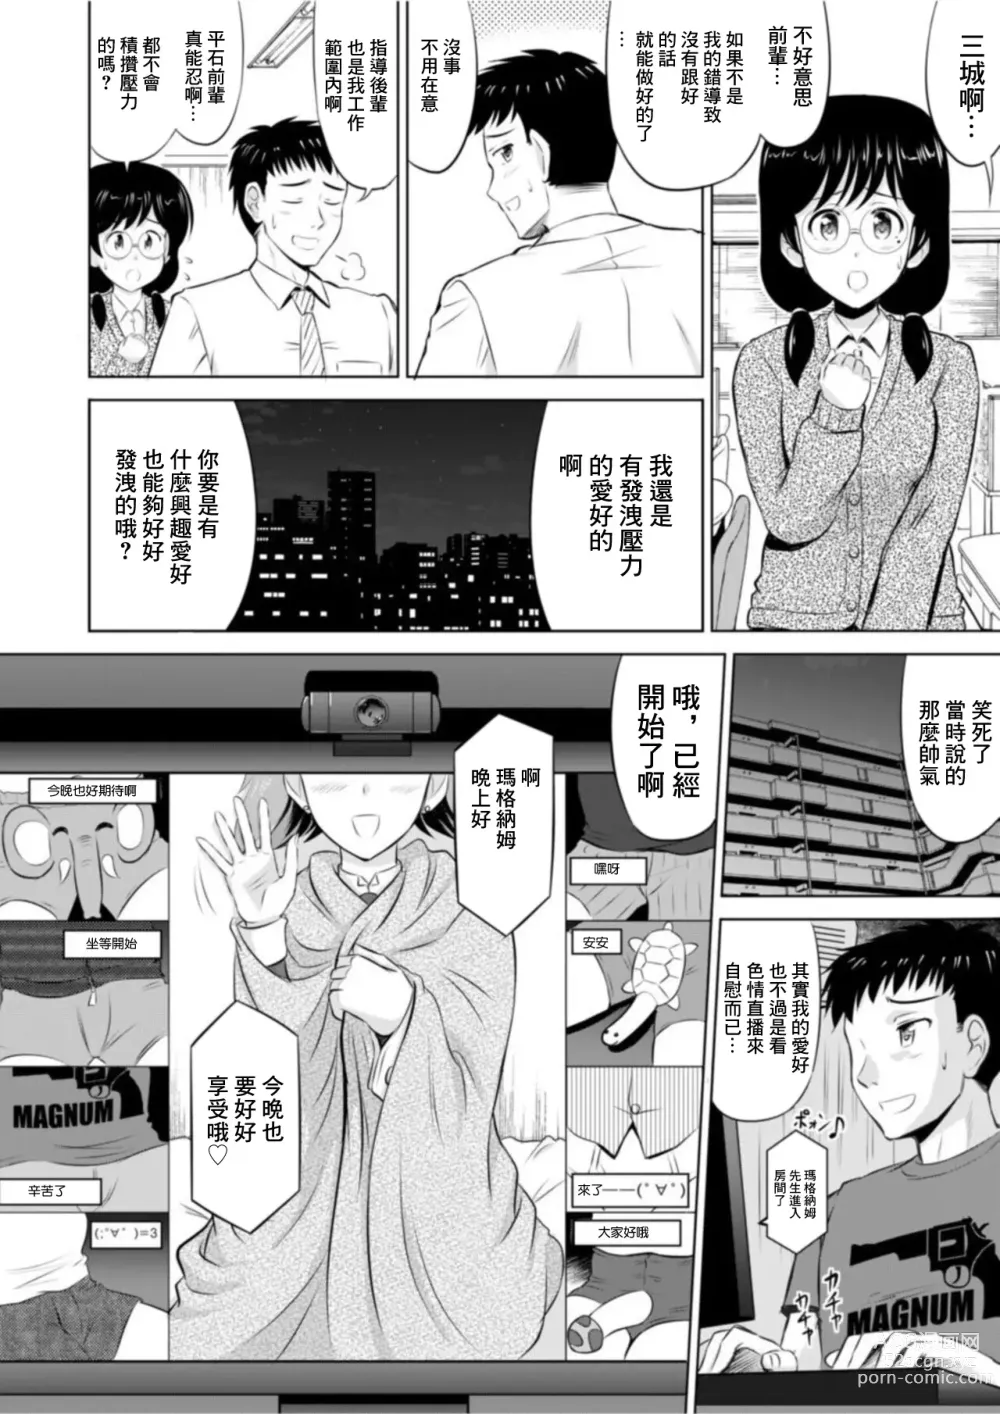 Page 8 of doujinshi 隔壁人妻對於Cosplay做愛非常擅長...